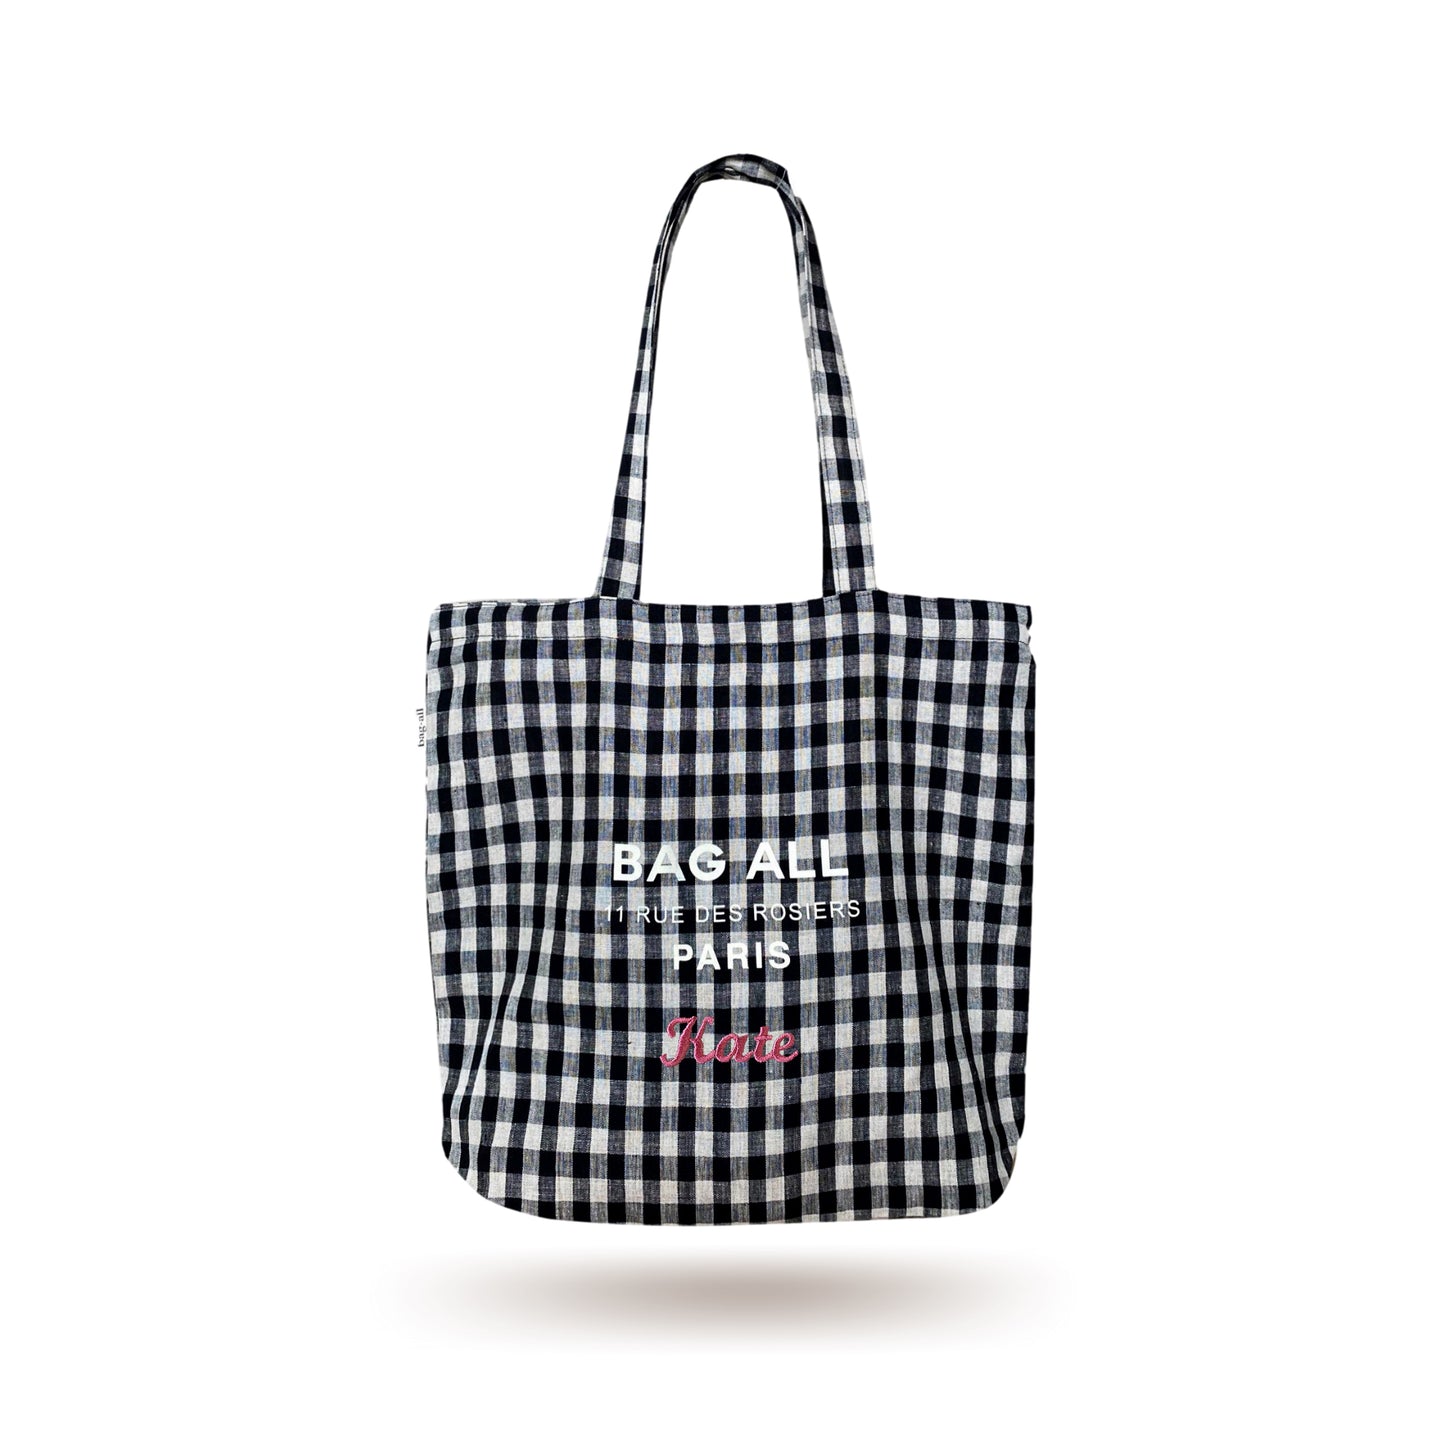 
                                      
                                        Paris Zipper Tote Bag Gingham Checkered Linen - Bag-all Europe
                                      
                                    